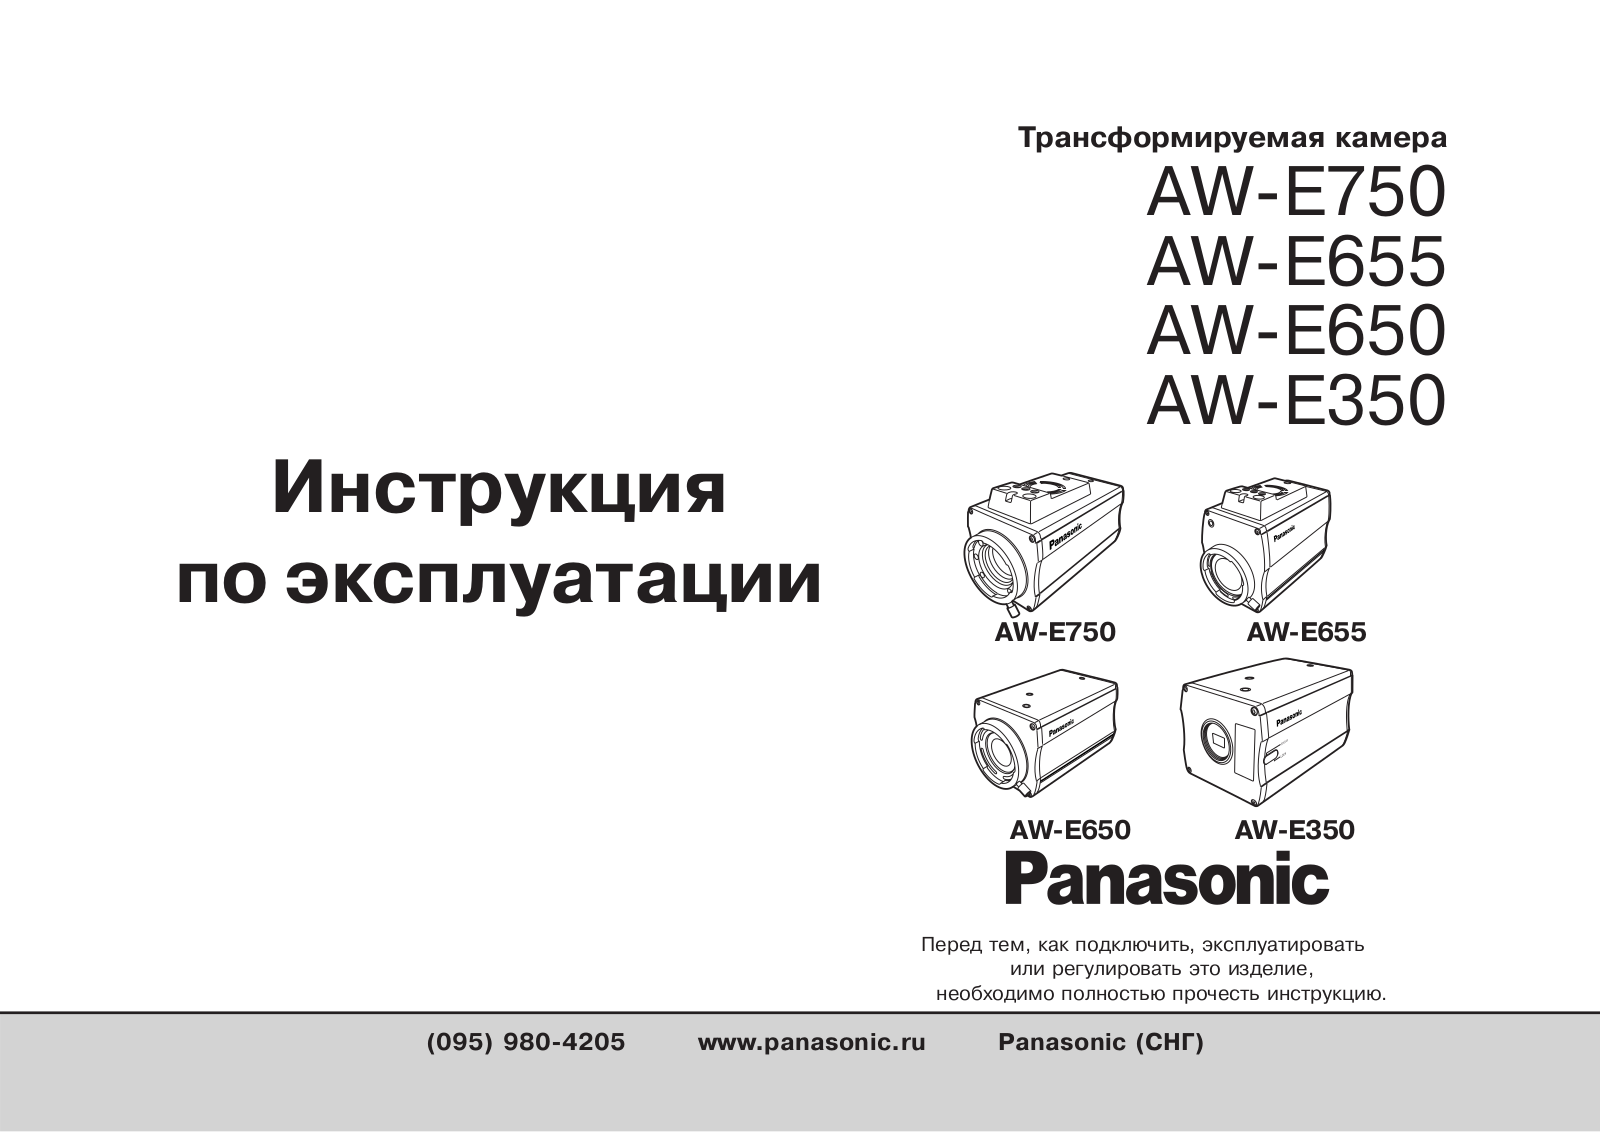 Panasonic AW-E650 User Manual